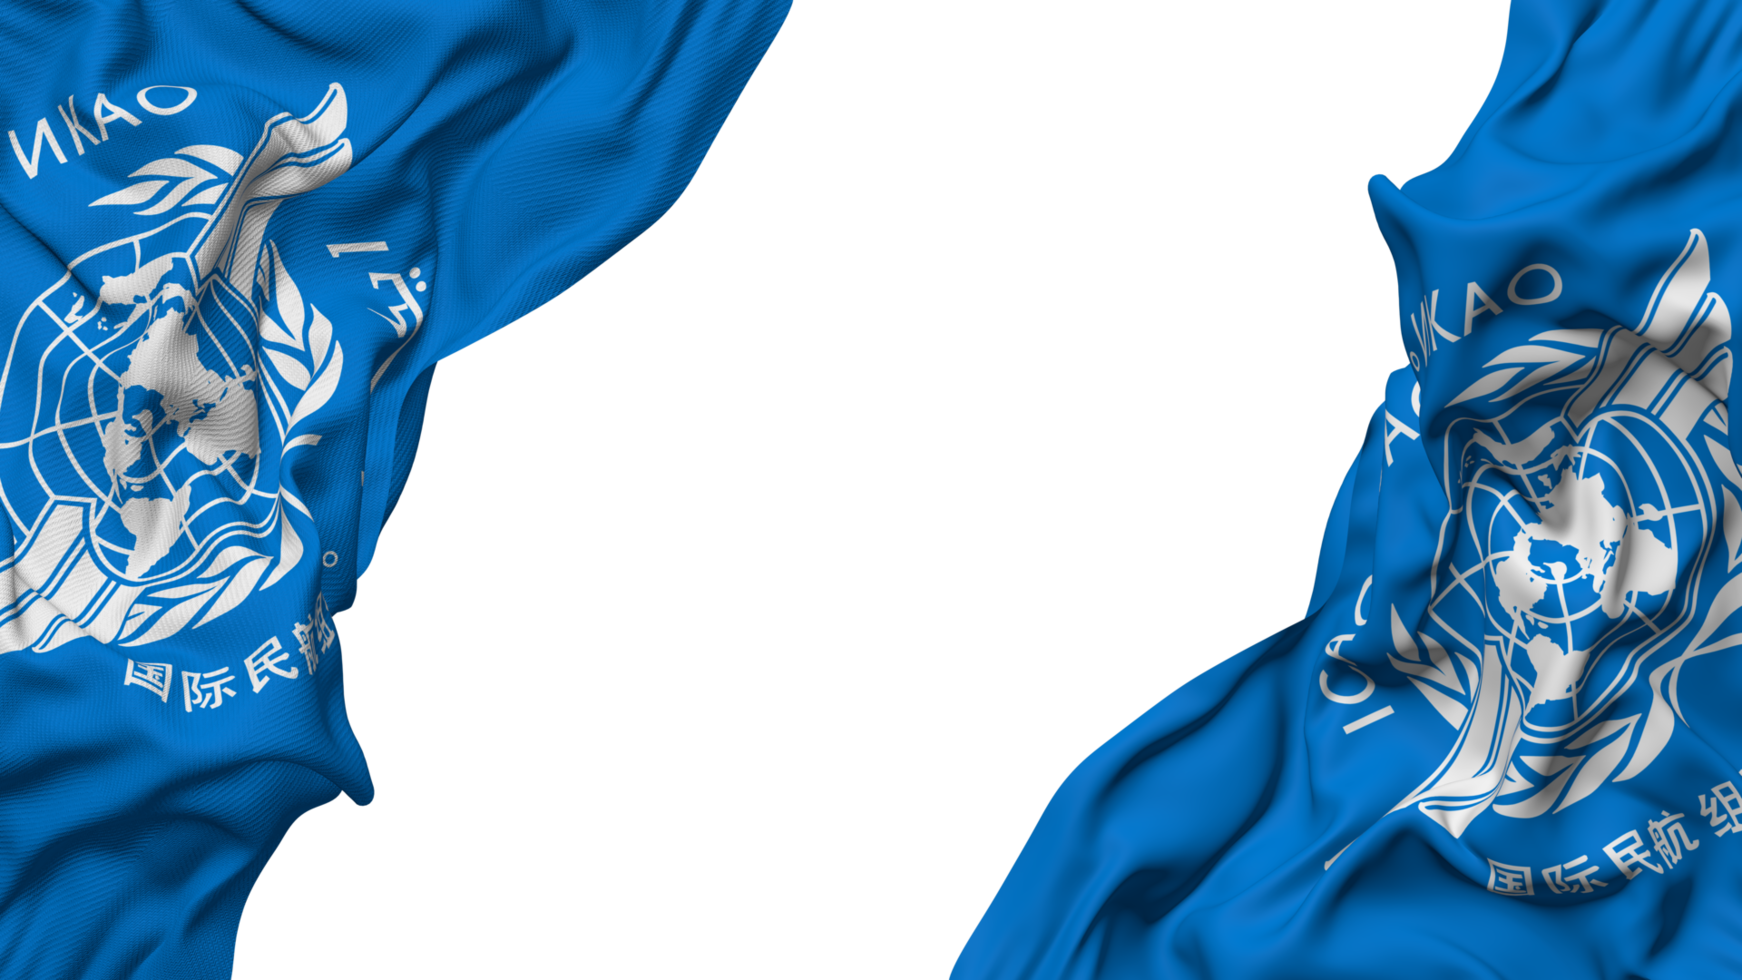 internacional civil aviación organización, OACI bandera paño ola bandera en el esquina con bache y llanura textura, aislado, 3d representación png